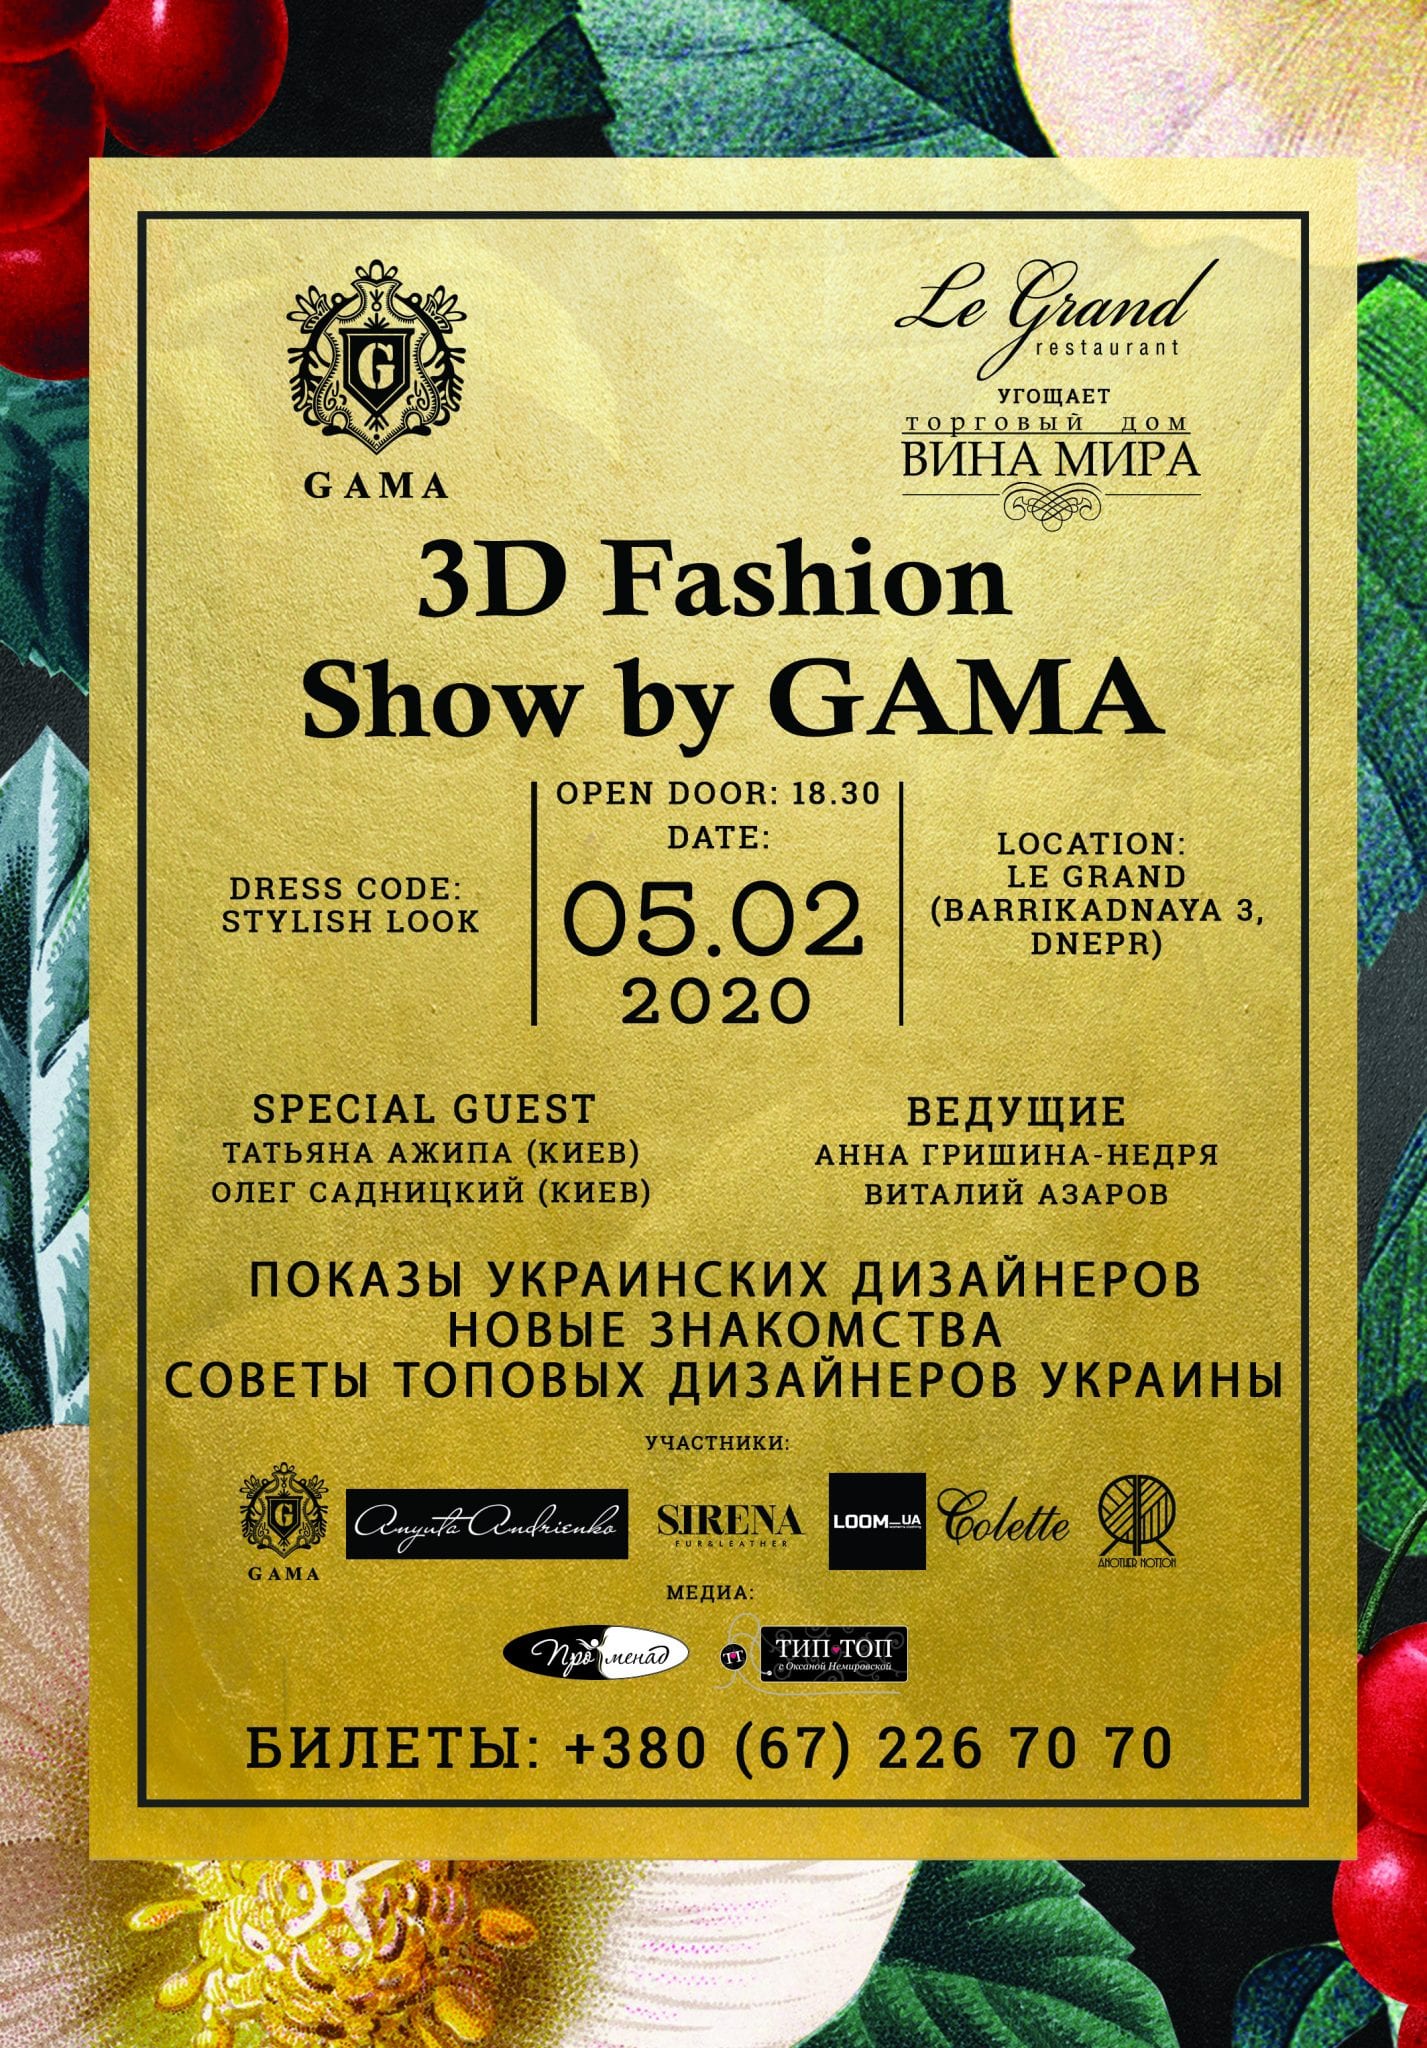 3D Fashion Show by GAMA Днепр, 05.02.2020, цена, даты, купить билеты. Афиша Днепра